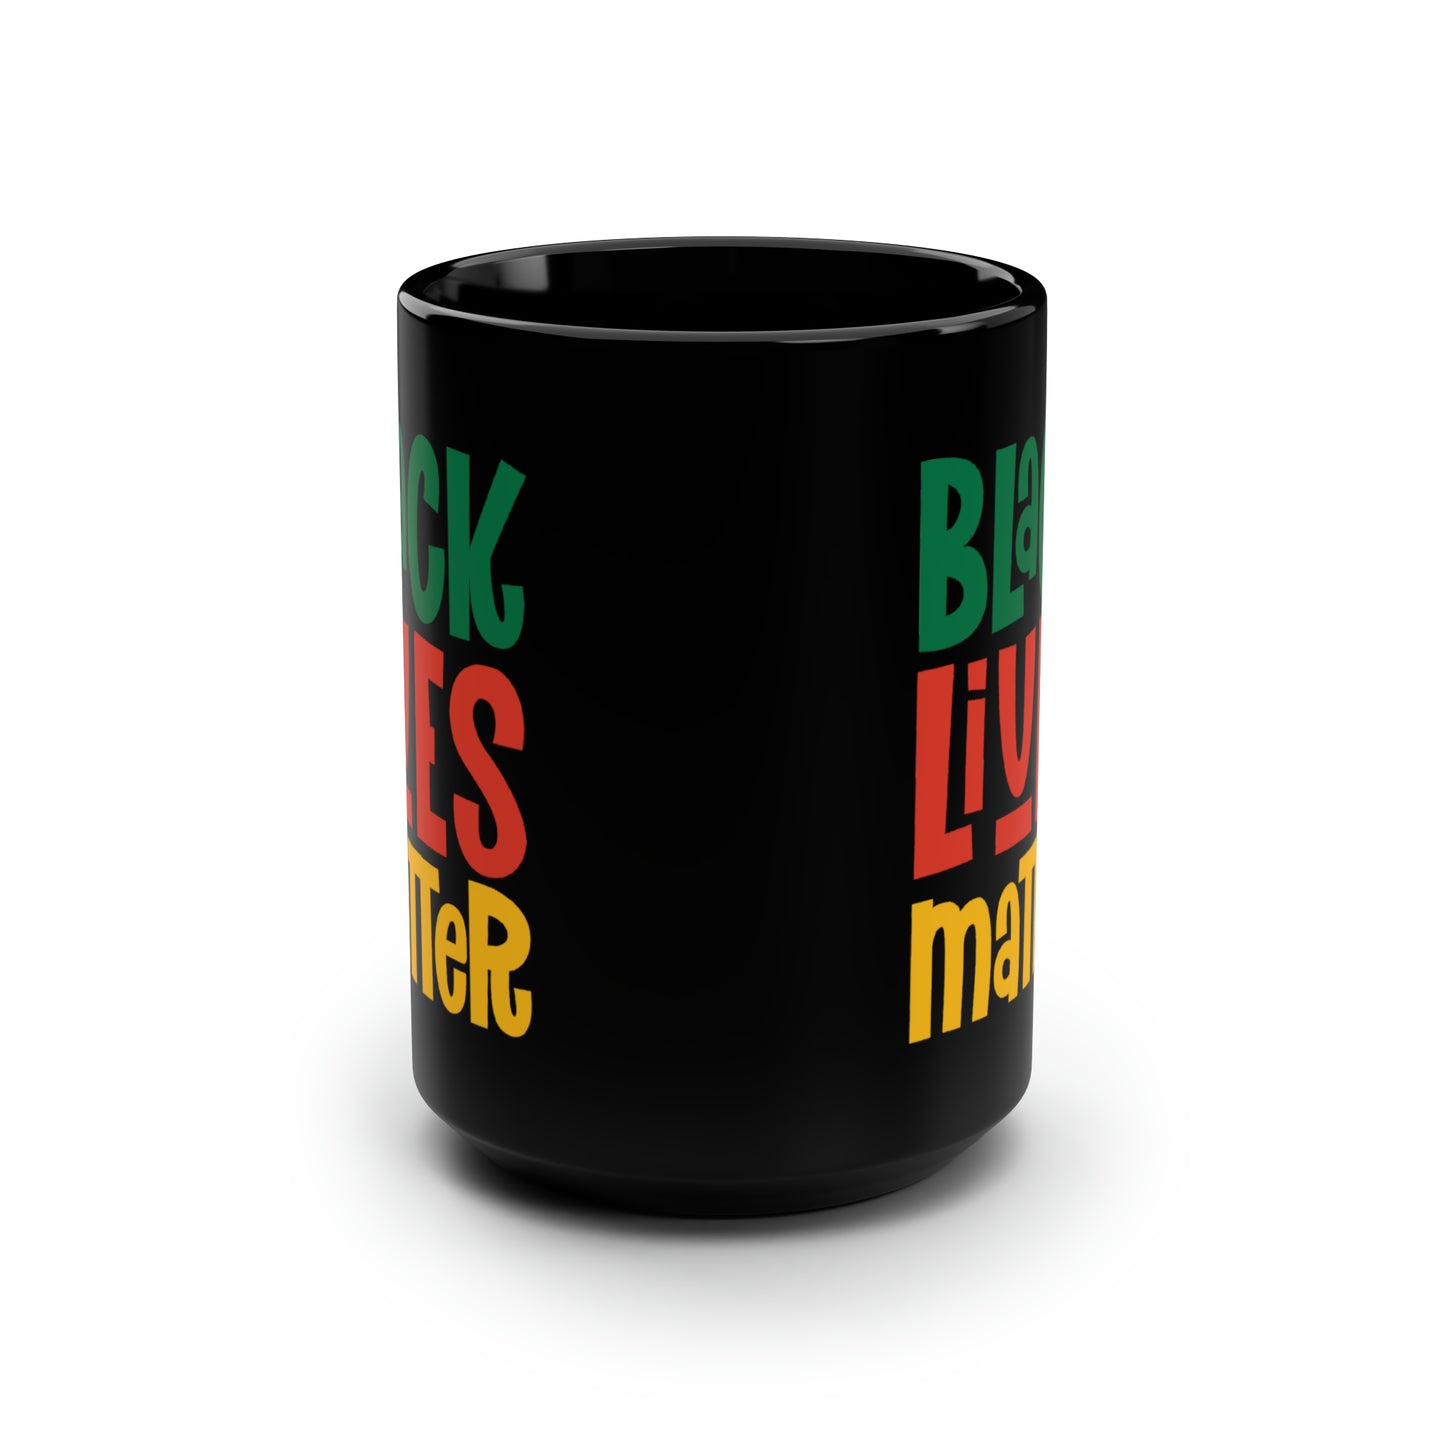 “Black Lives Matter – Solidarity (Pan-Africa 2)” 15 oz. Mug